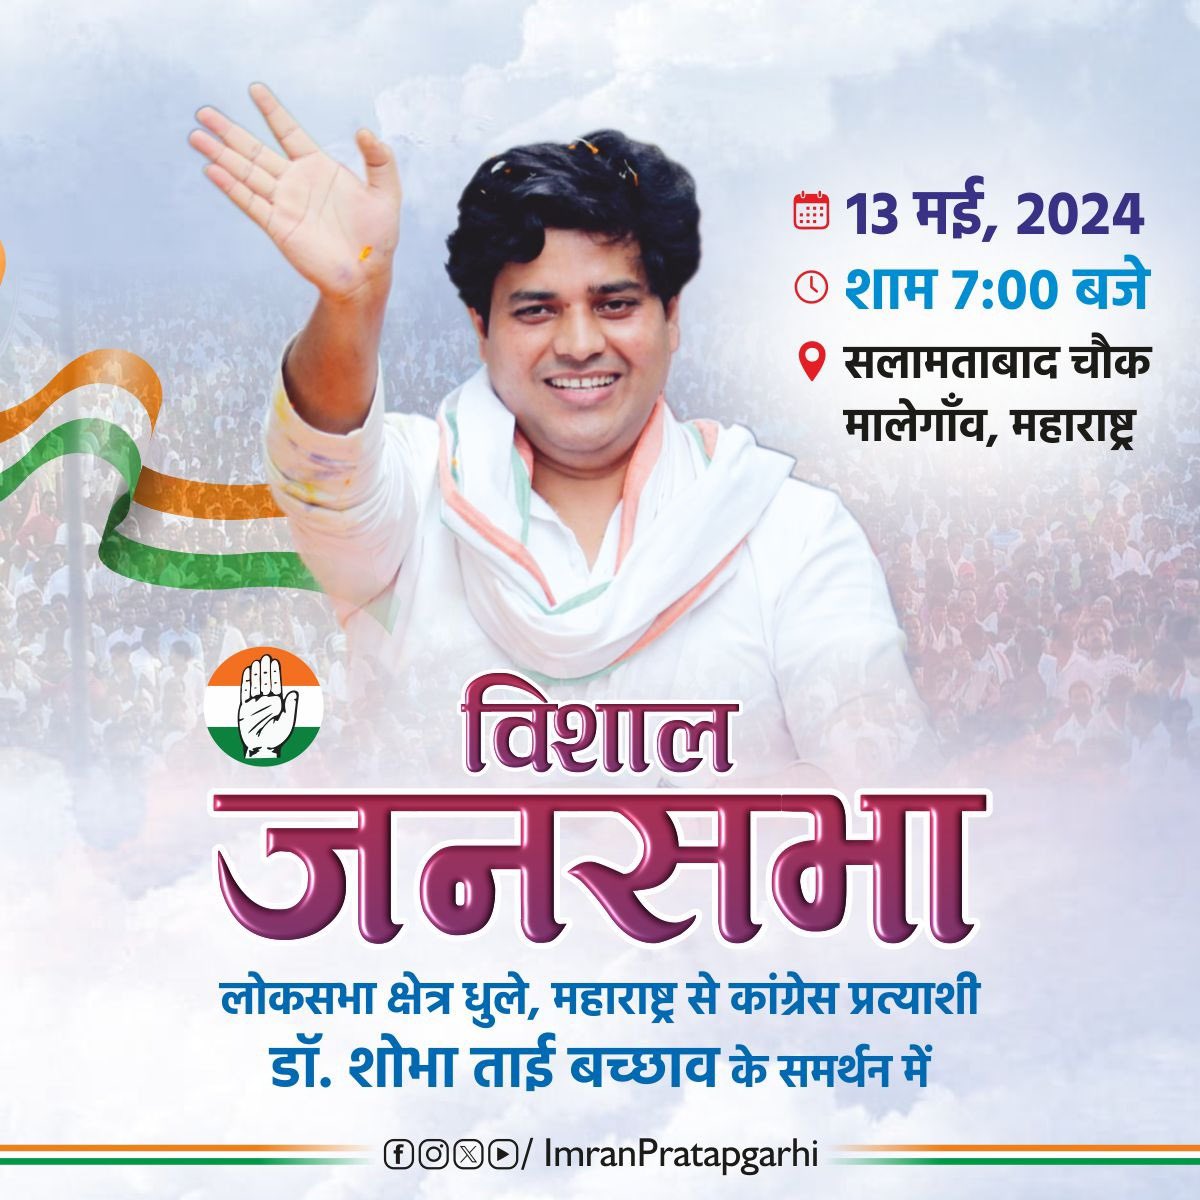 13 मई, 2024 मालेगॉंव, महाराष्ट्र धुले लोकसभा की कॉंग्रेस प्रत्याशी शोभा ताई बच्छाव के समर्थन में जनसभा को संबोधित करूँगा। @INCMaharashtra